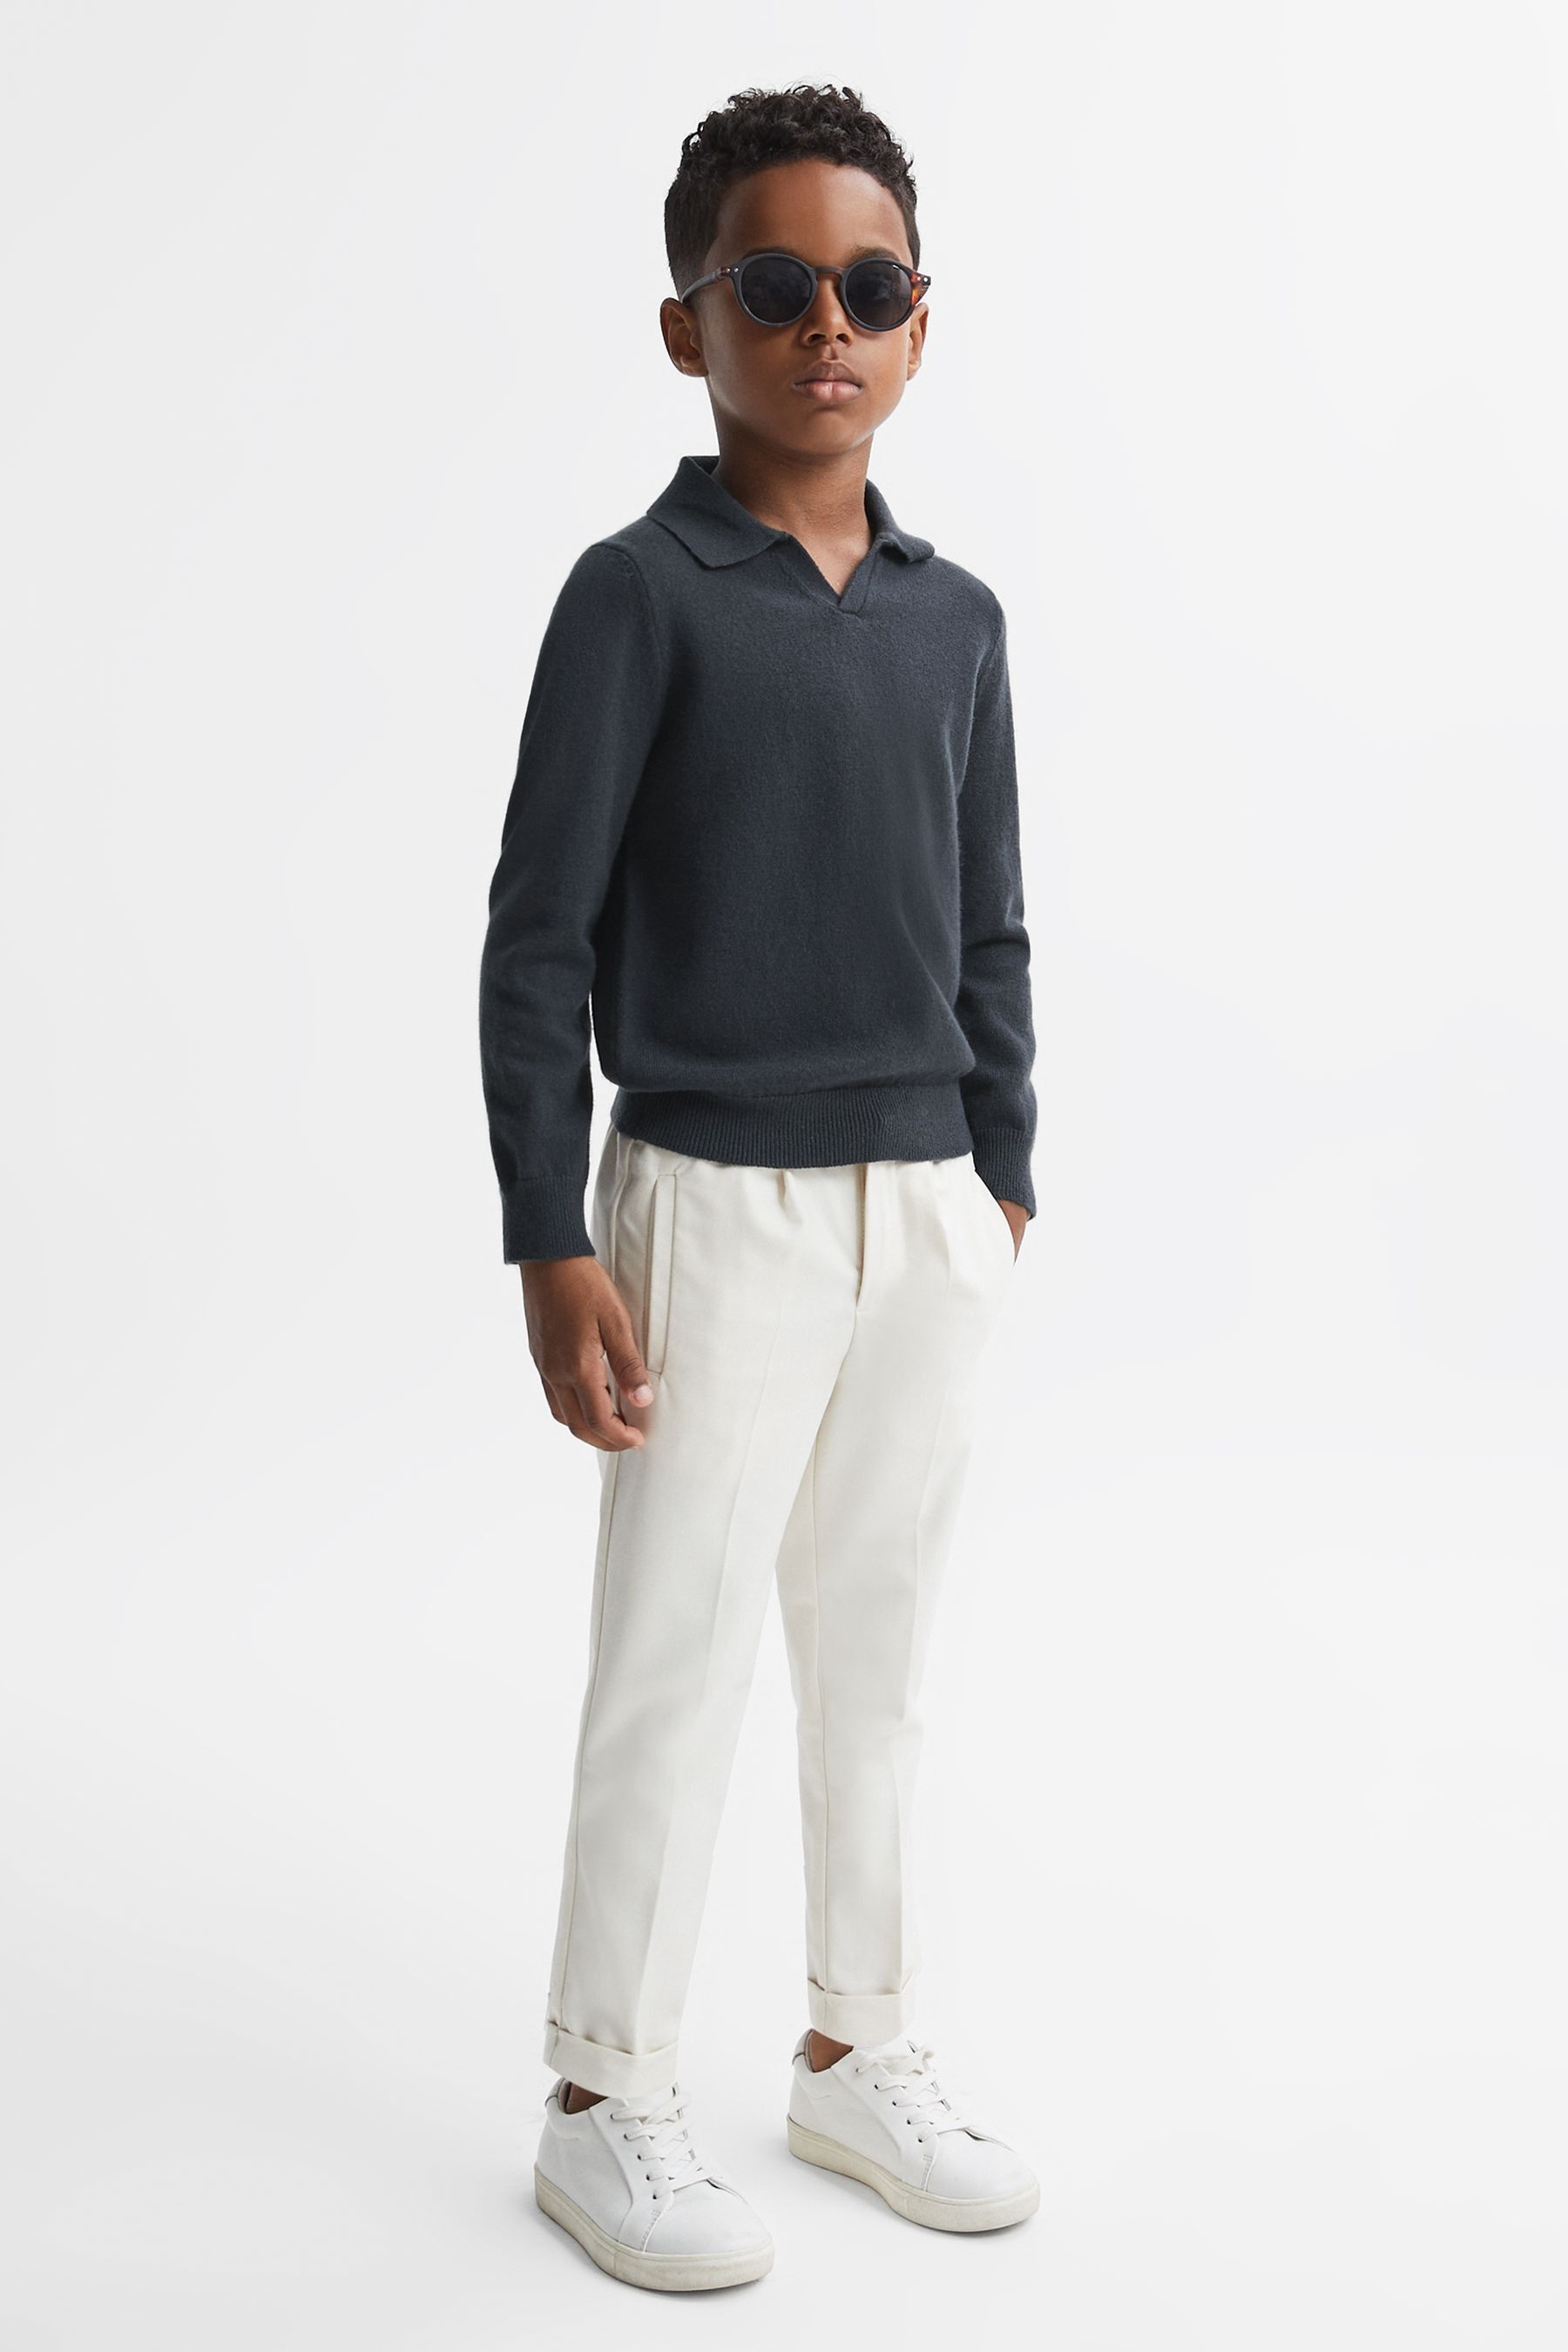 Reiss Swifts - Anthracite Grey Junior Slim Fit Merino Wool Open Collar Top, Age 3-4 Years